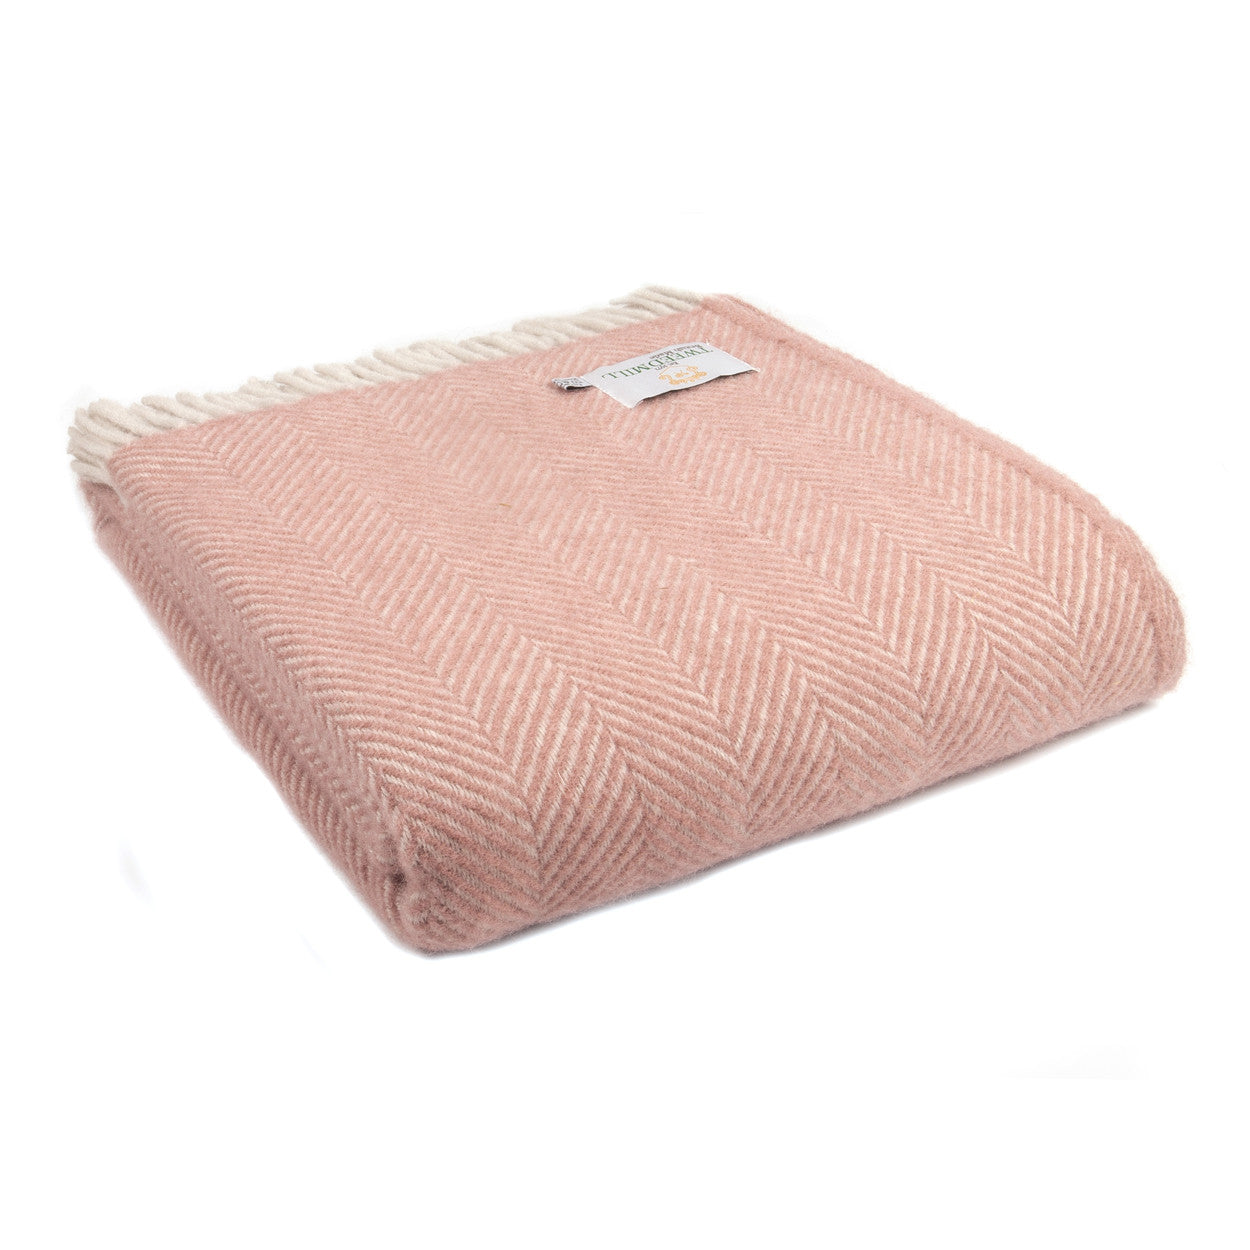 Herringbone Knee Blankets - Pure New Wool Made in the UK by Tweedmill